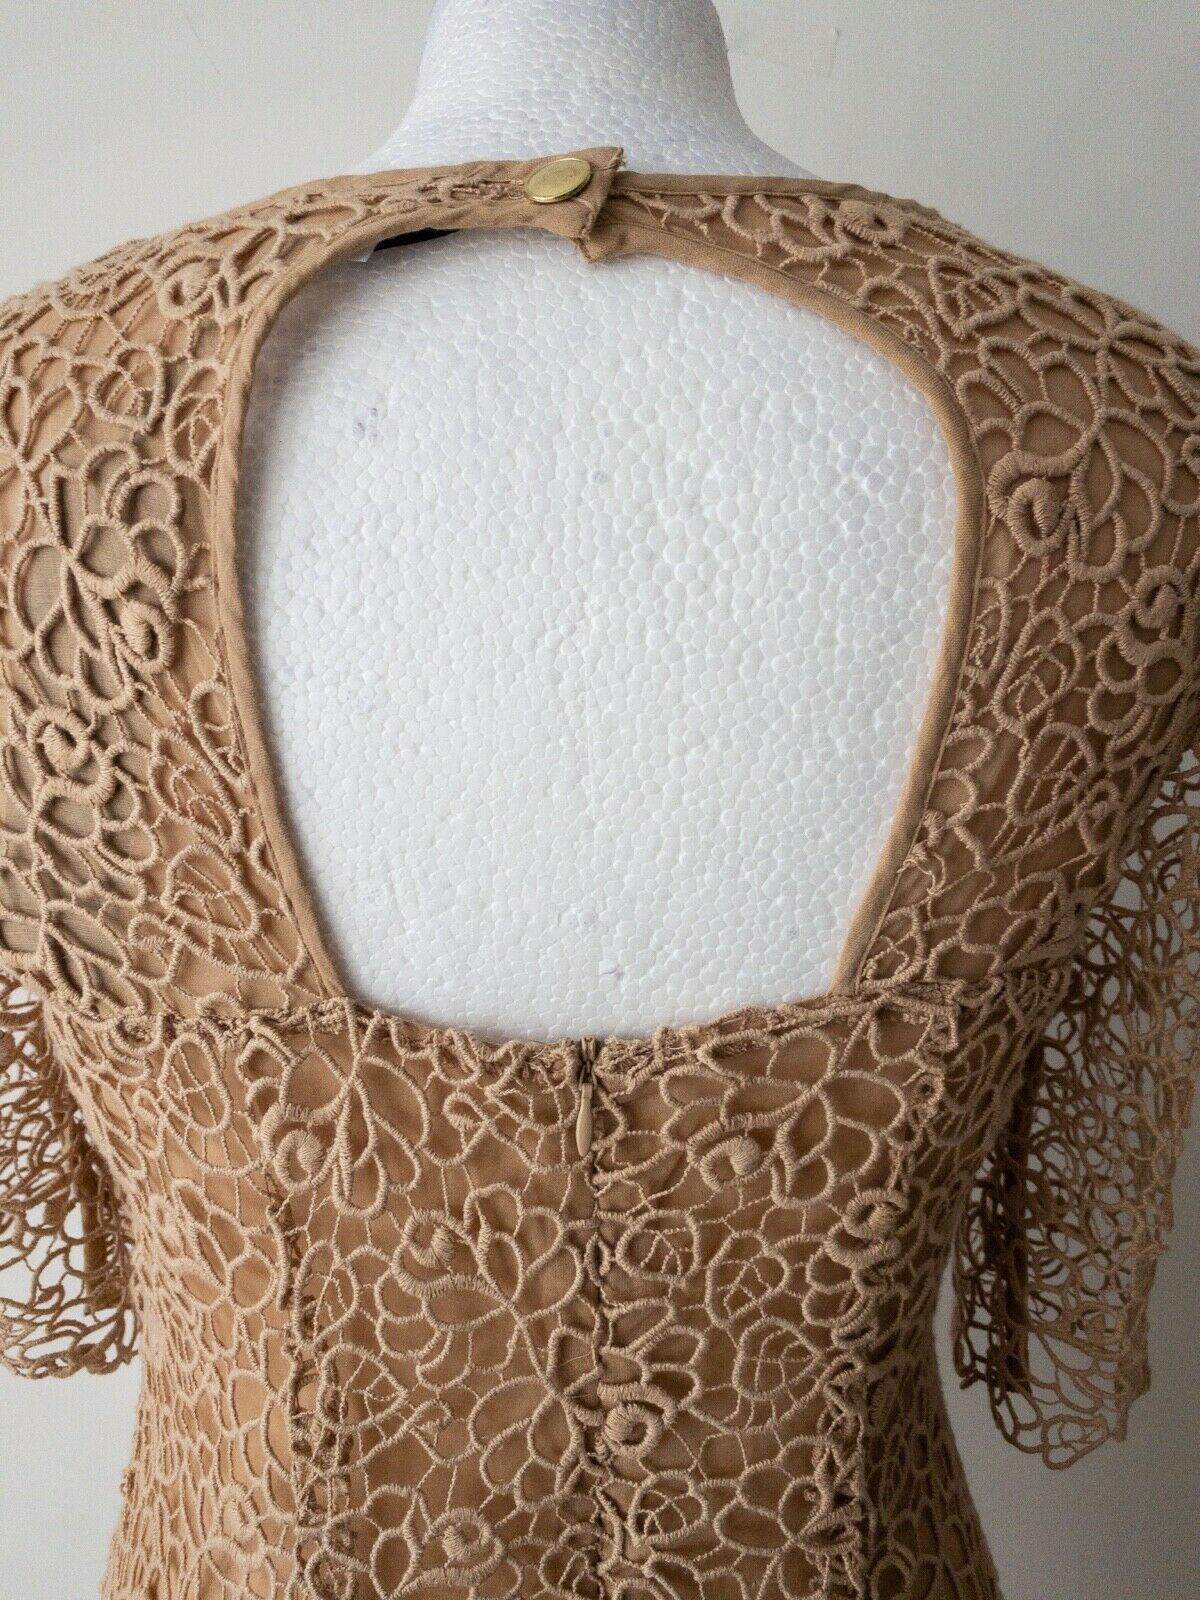 Laura Clement La Redoute Crochet Layered Dress Size 10